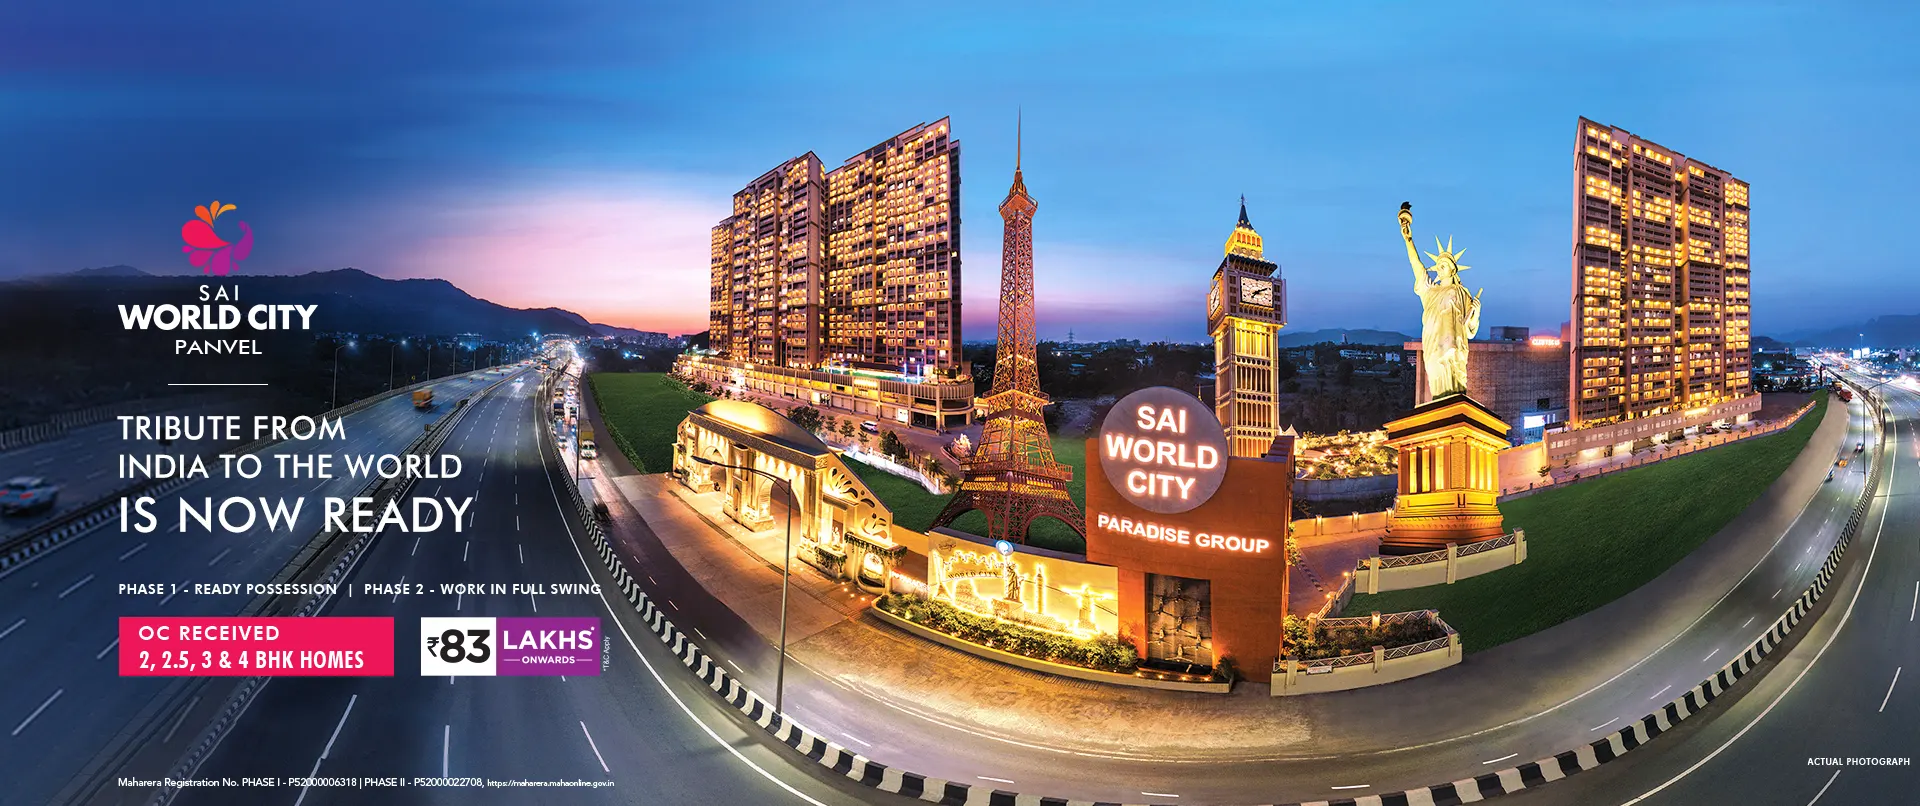 Sai World City Homepage Desktop Banner